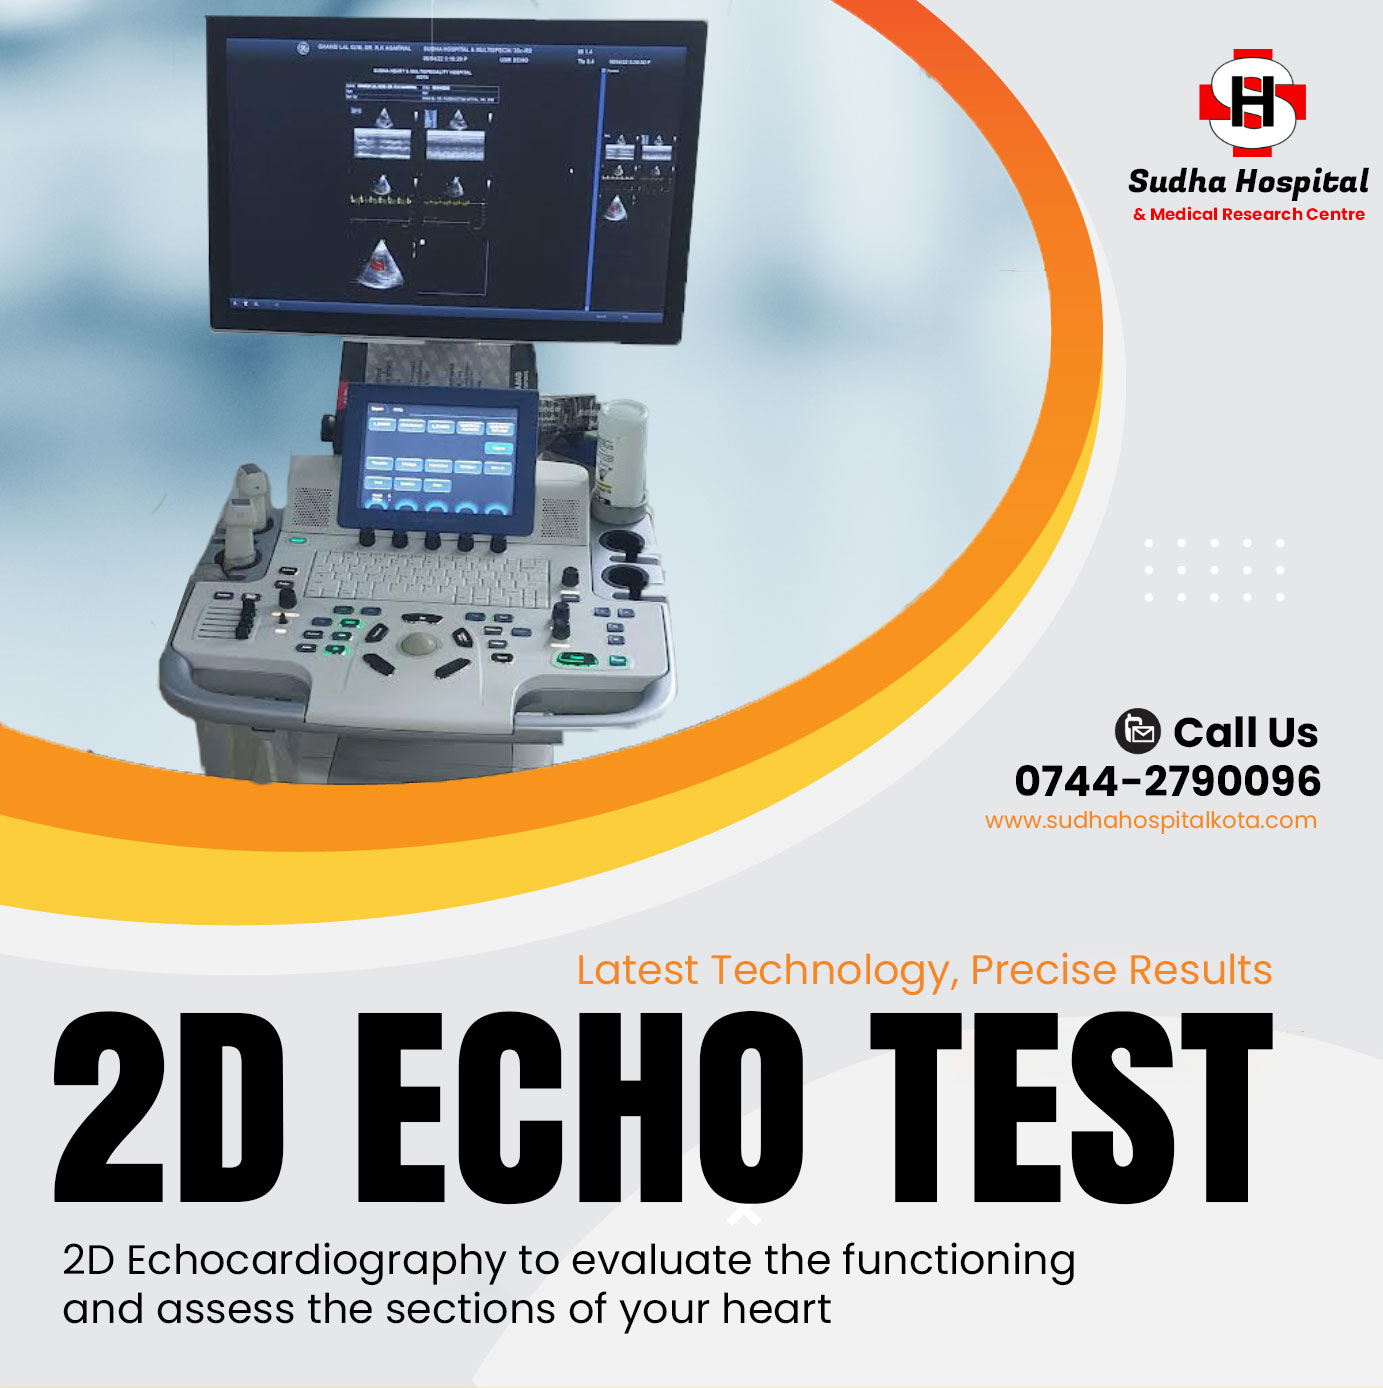 2D Echo Test for heart in Kota | Sudha Hospital & Medical Research Centre - Kota